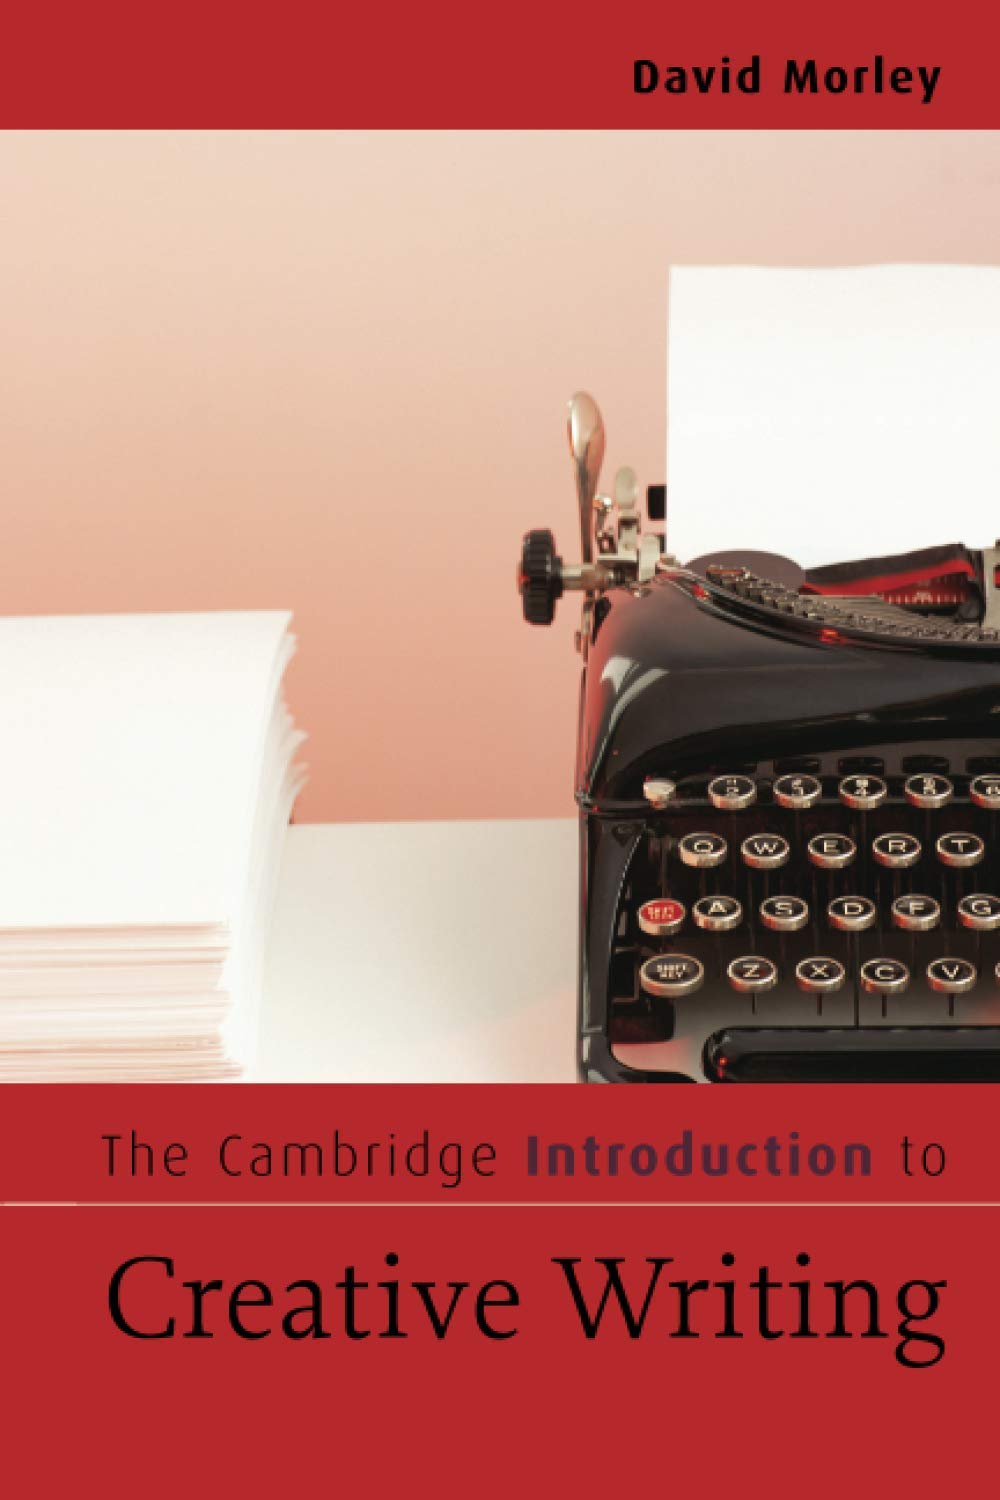 cambridge university creative writing online course